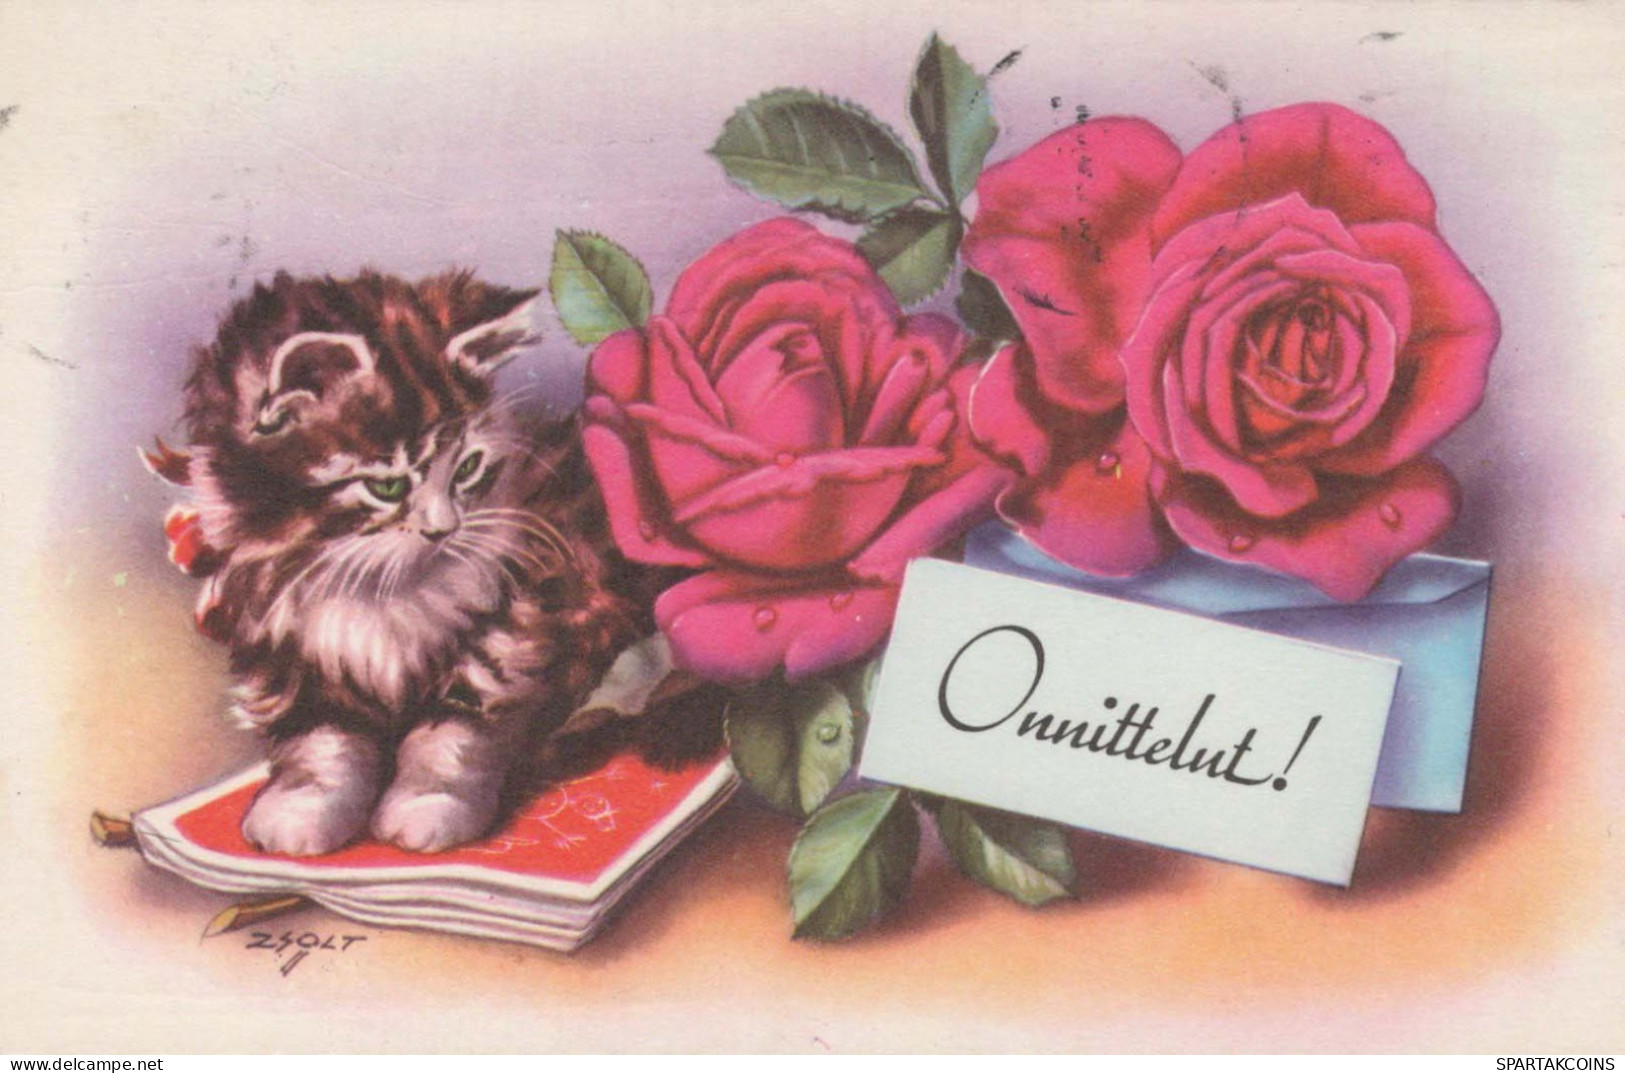 KATZE MIEZEKATZE Tier Vintage Ansichtskarte Postkarte CPA #PKE750.A - Katzen